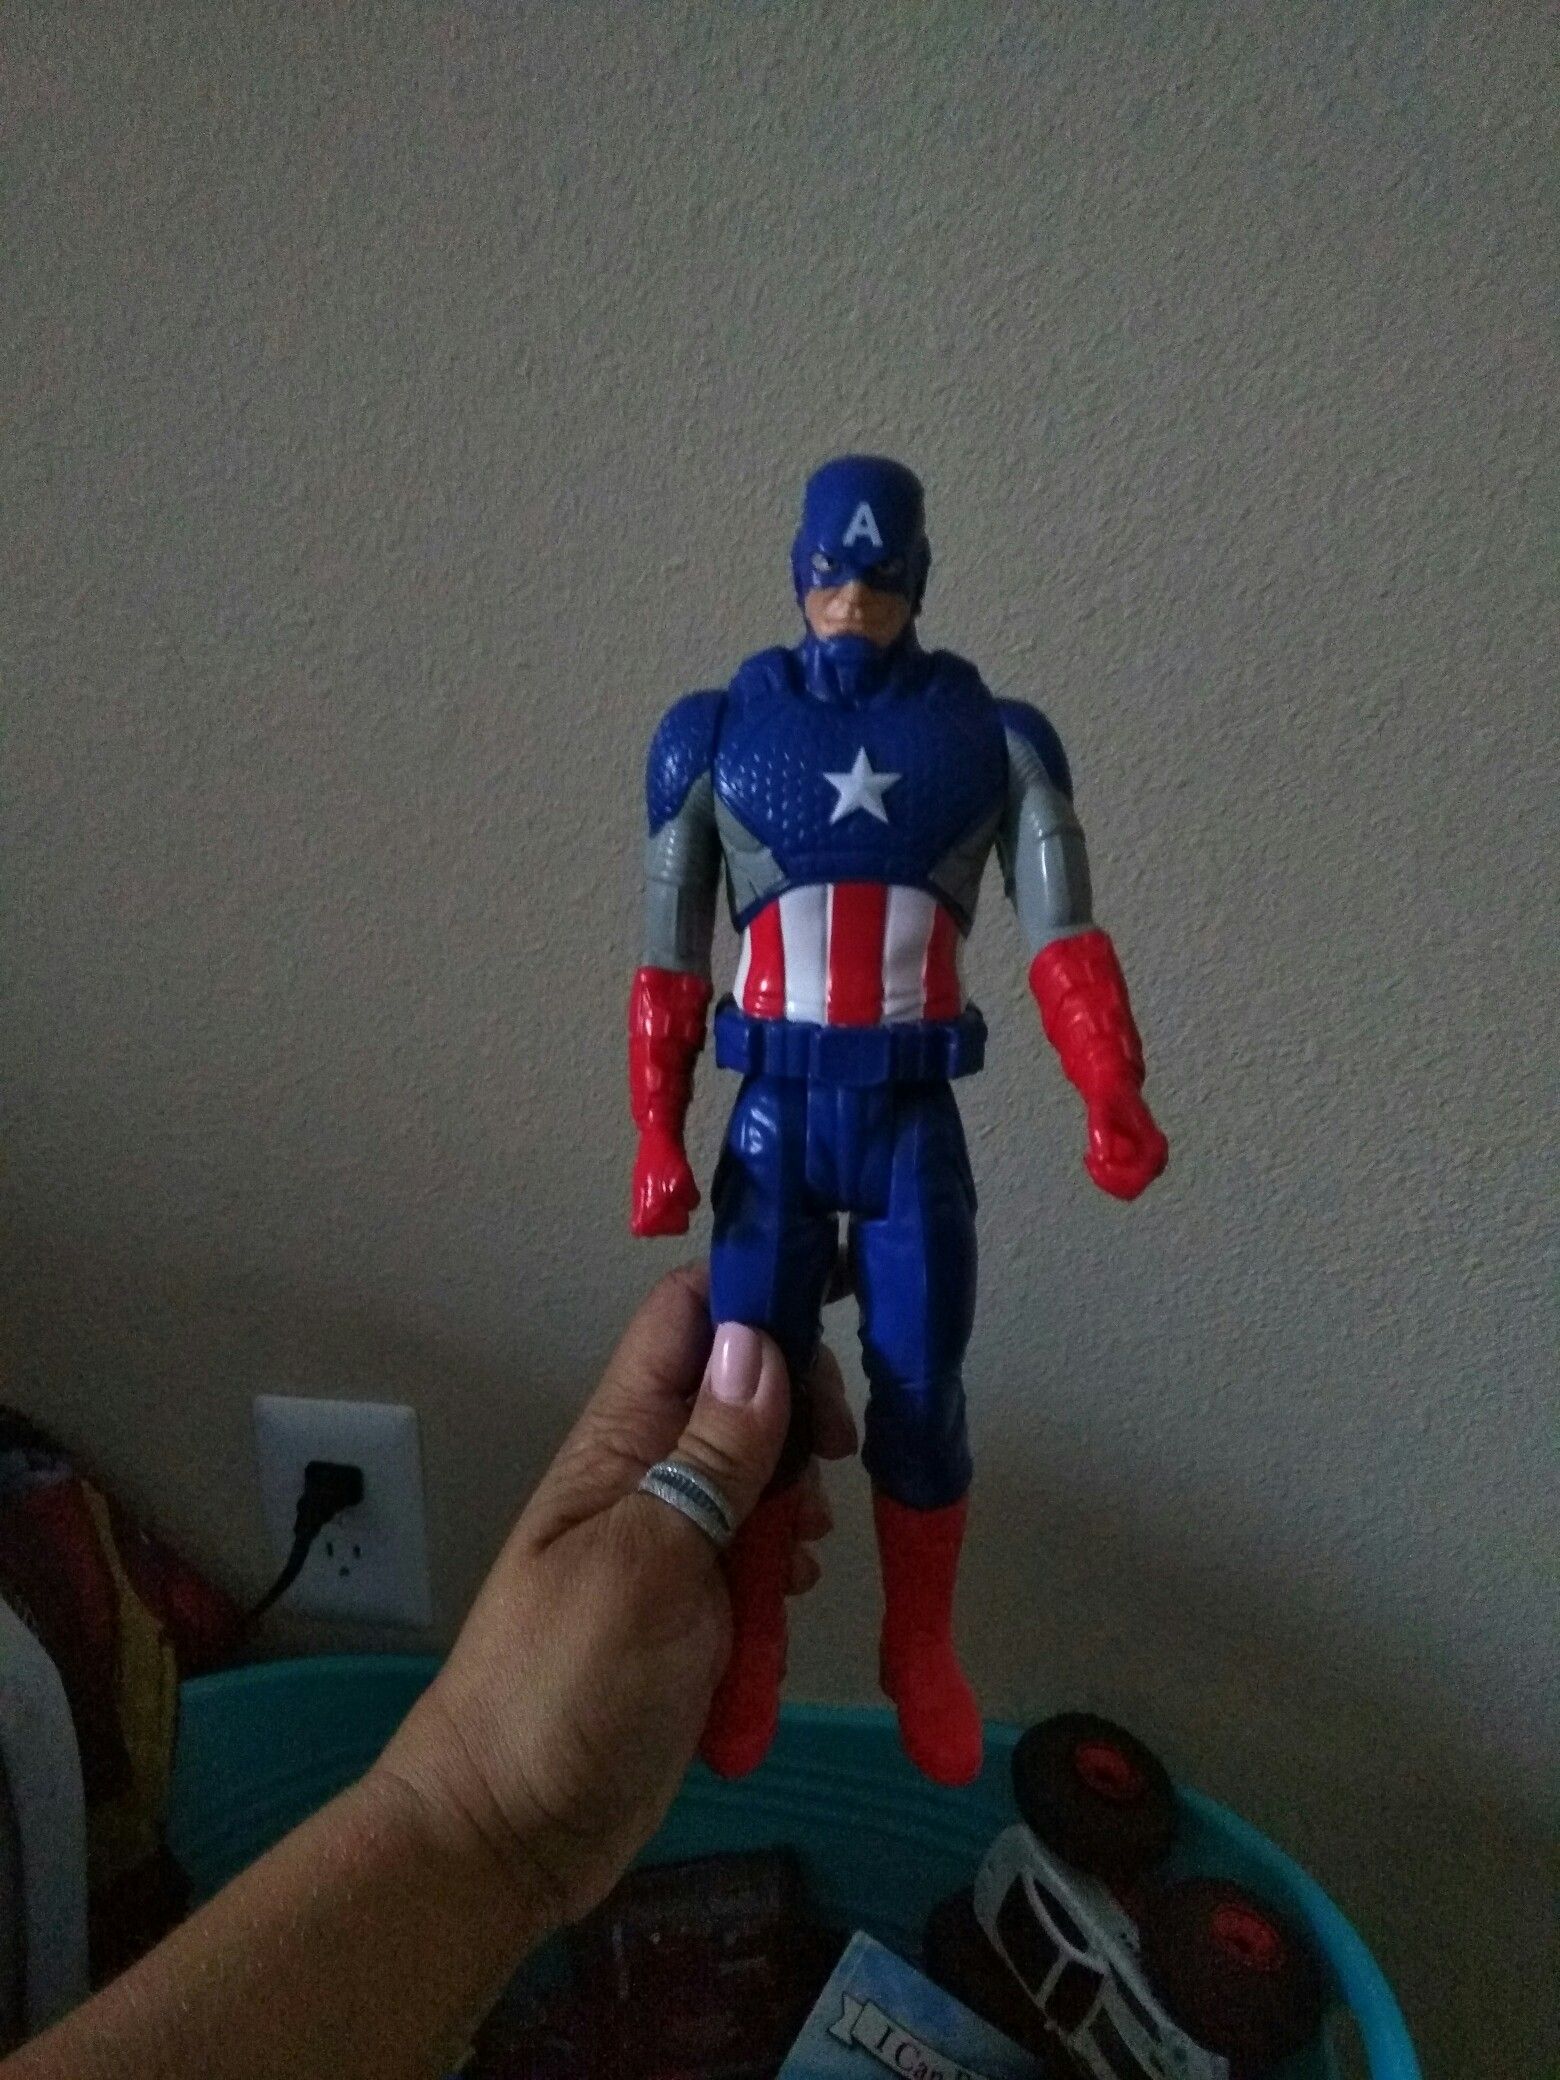 Captain America action figure